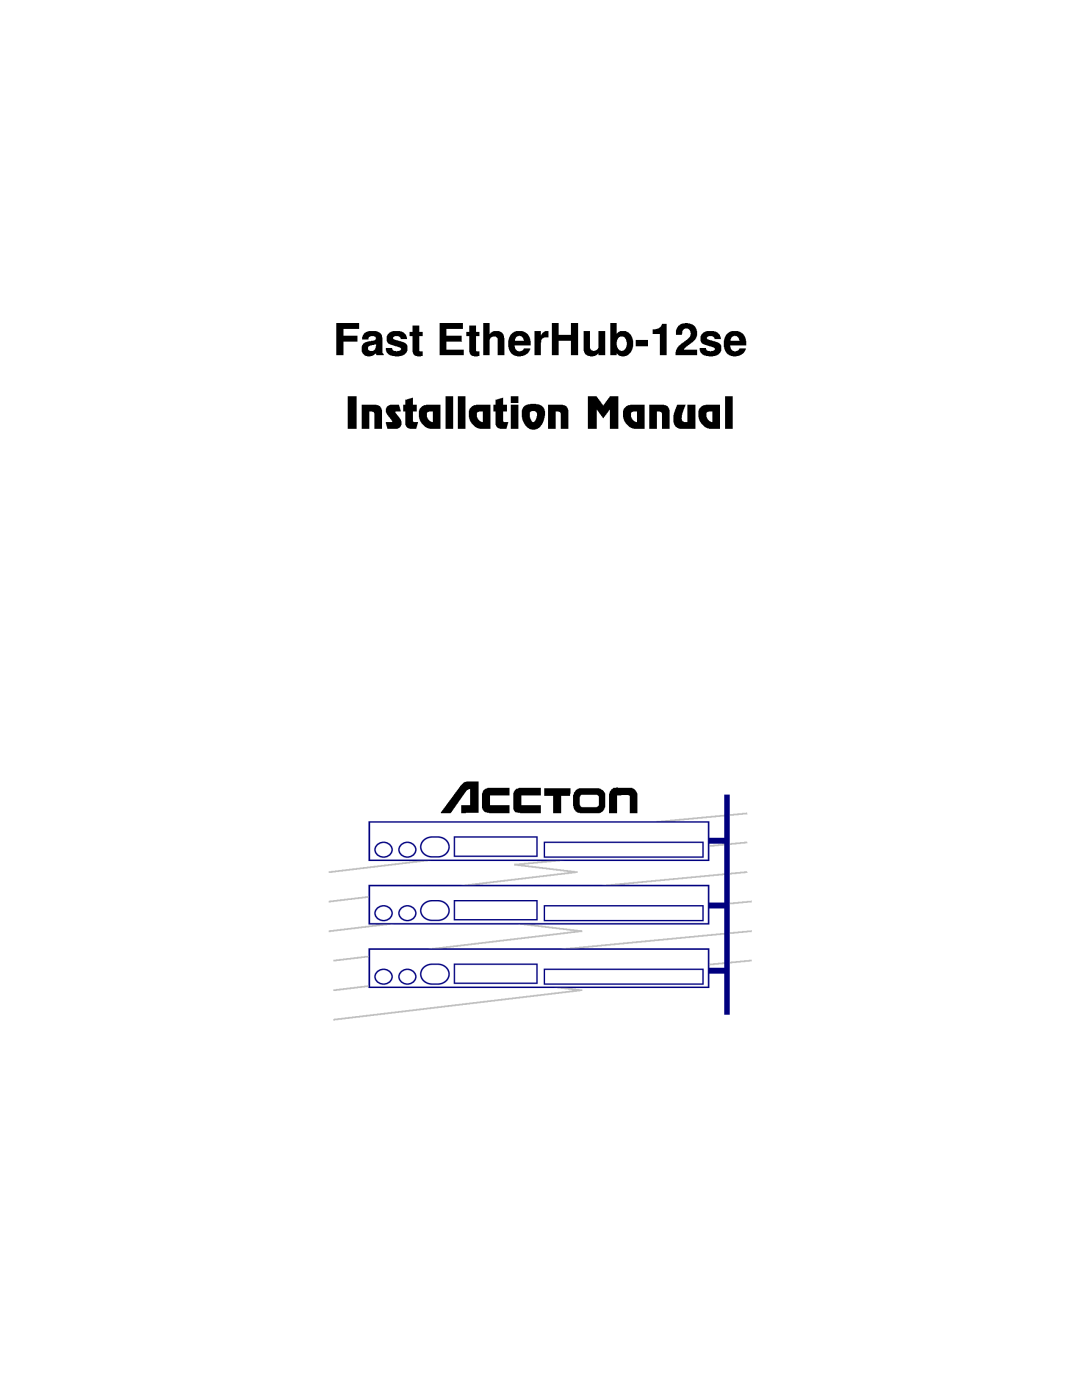 Accton Technology manual Fast EtherHub-12se, Inoggodji*Ipg 